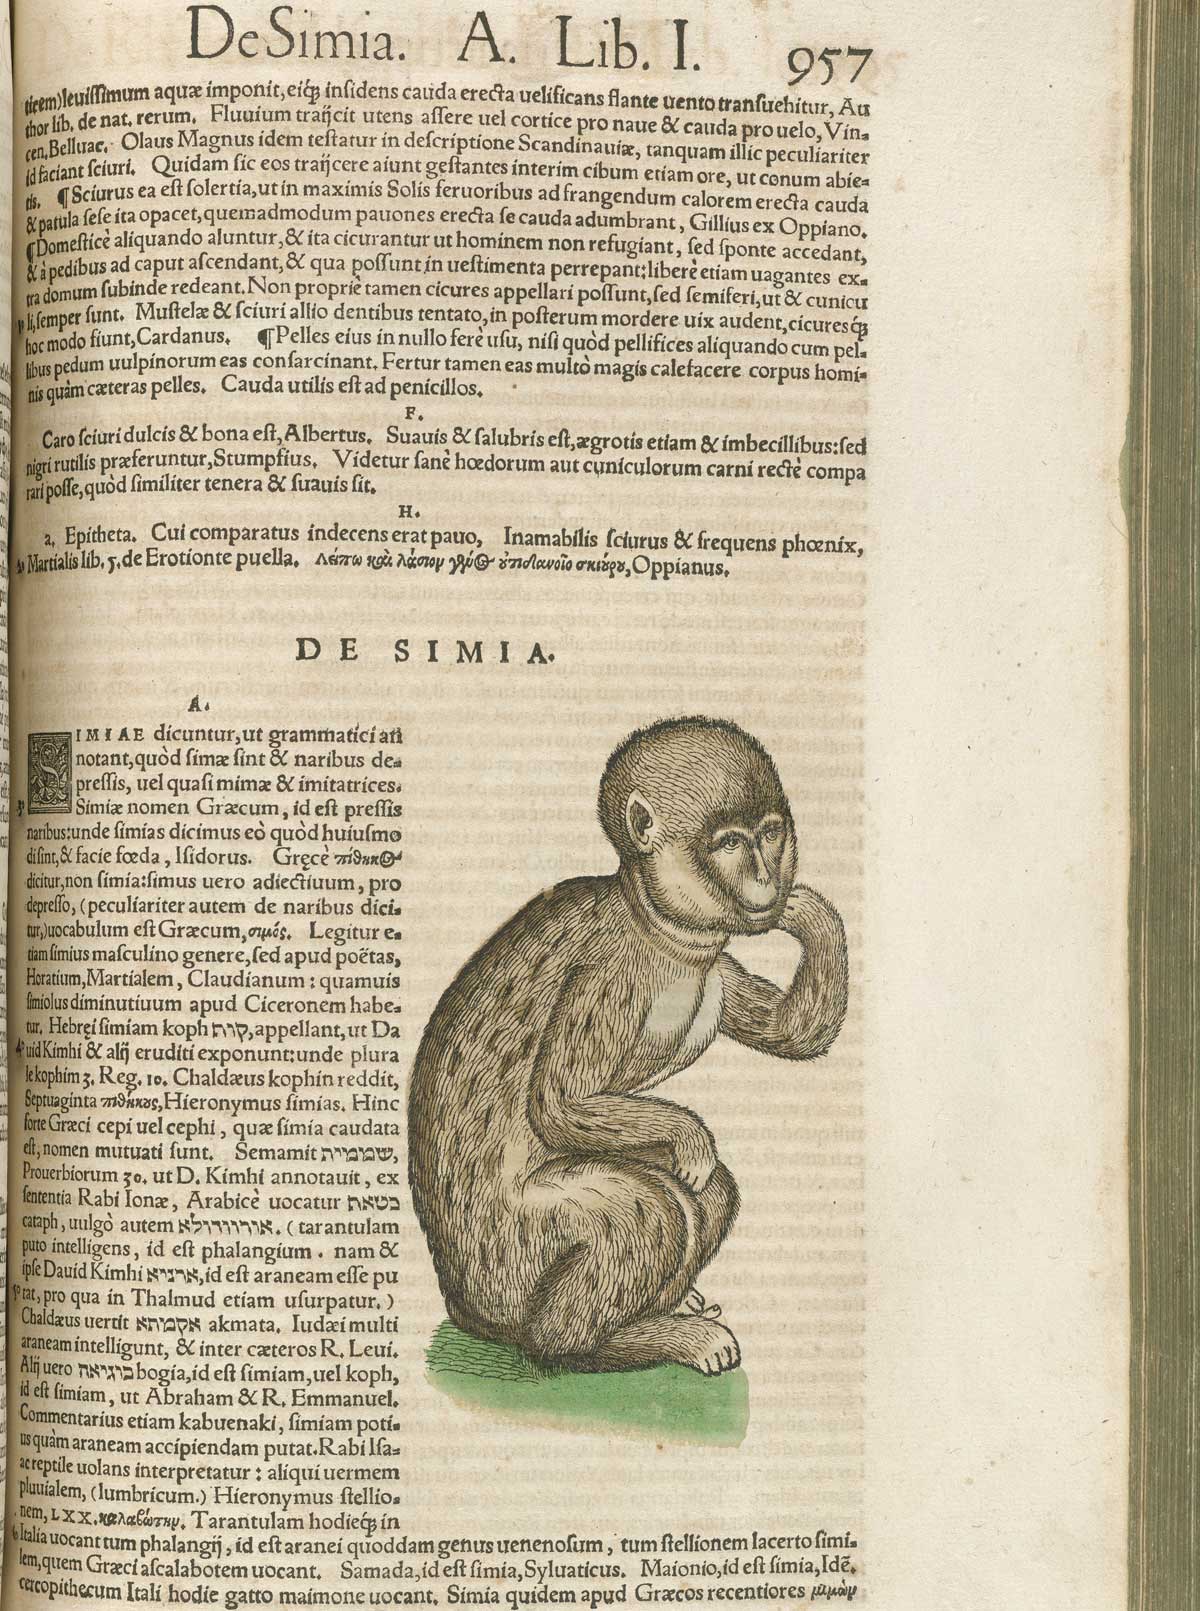 Page 957 from volume 1 of Conrad Gessner's Conradi Gesneri medici Tigurini Historiae animalium, featuring the colored woodcut of de simia or monkey.